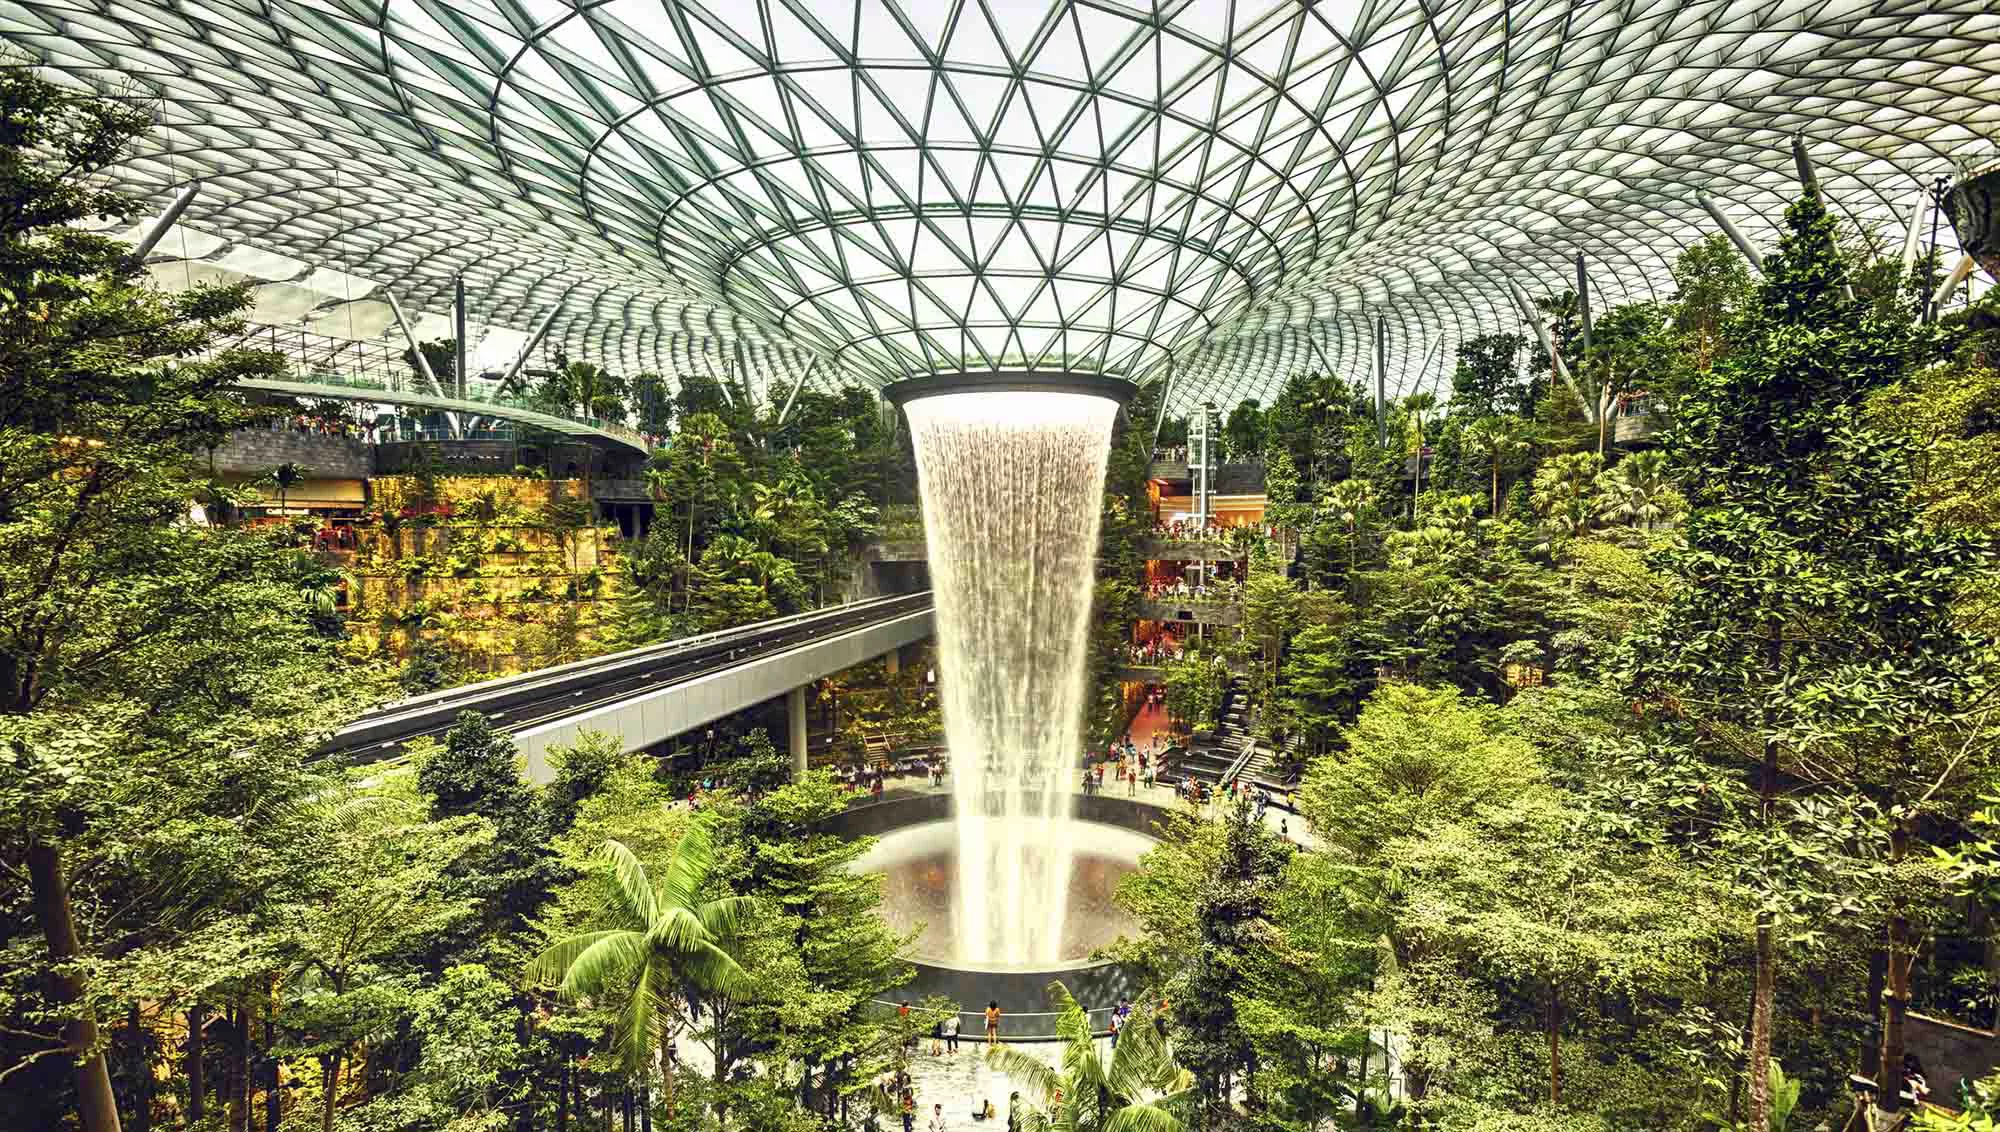 6.aeropuerto_changi_de_singapur